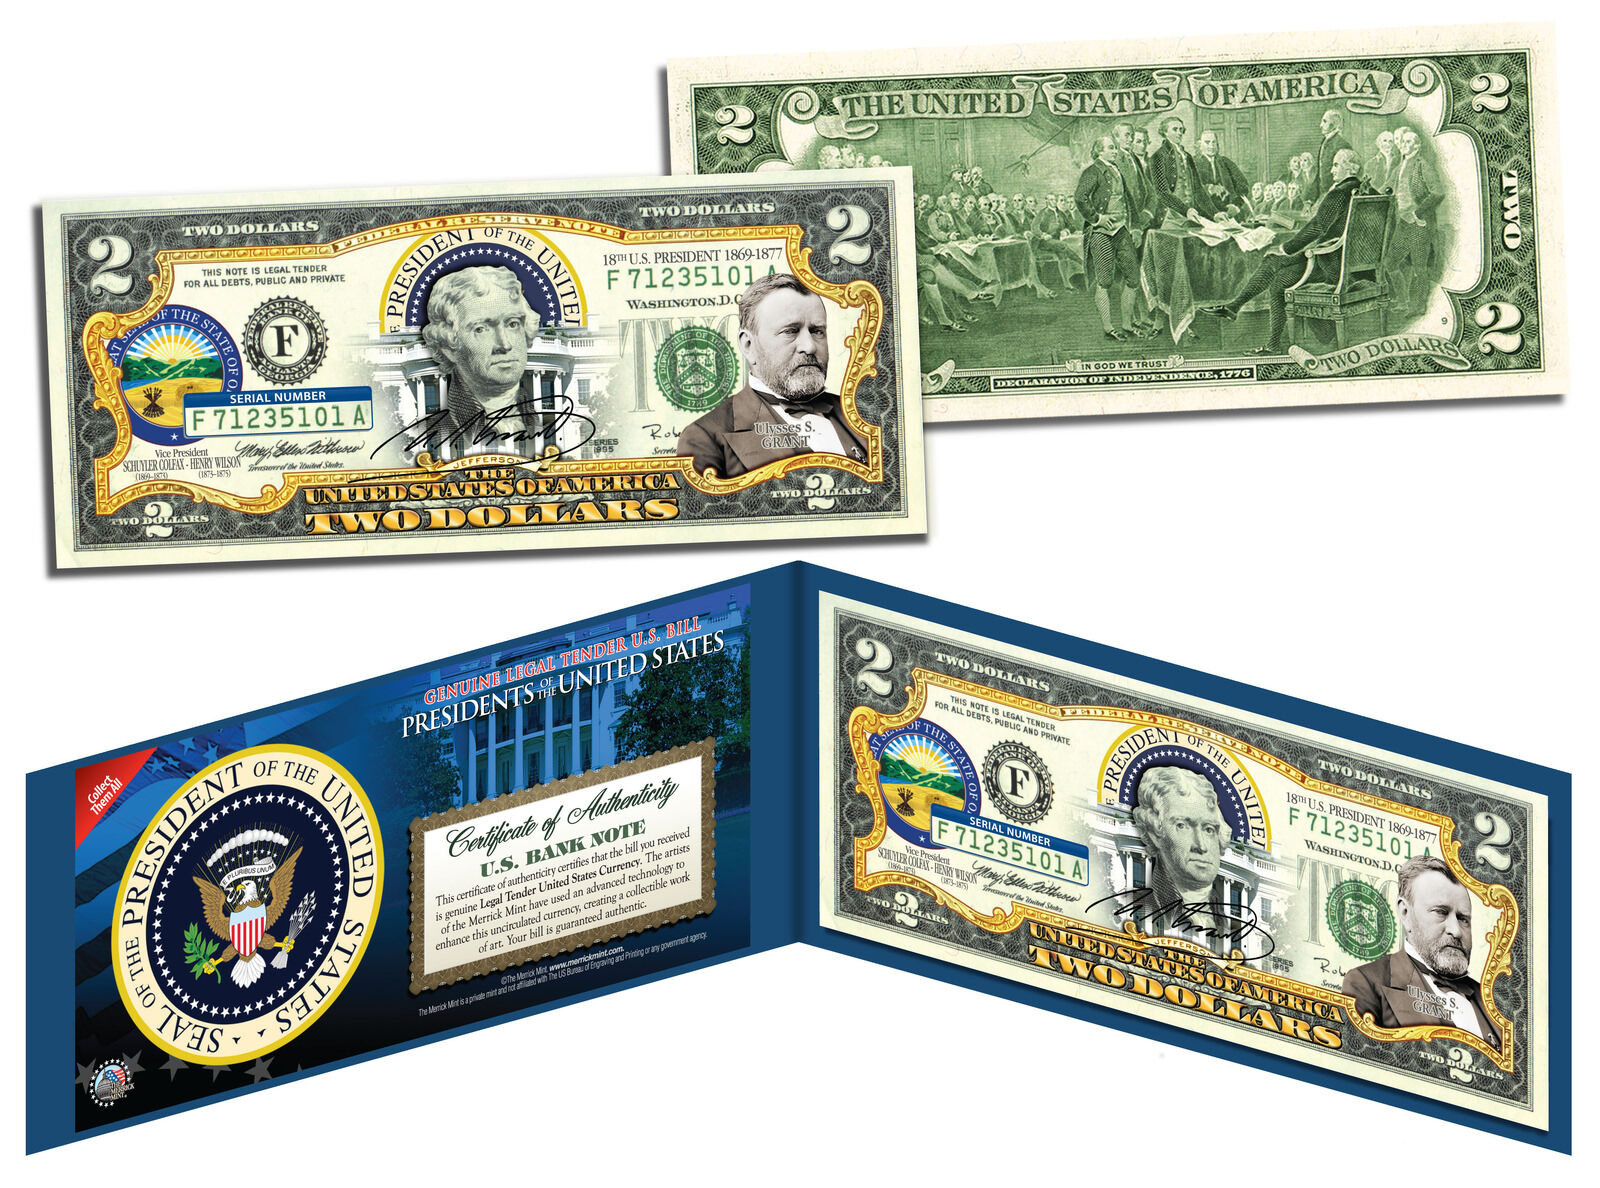 ULYSSES S GRANT * 18th U.S. President * Colorized $2 Bill Genuine Legal Tender